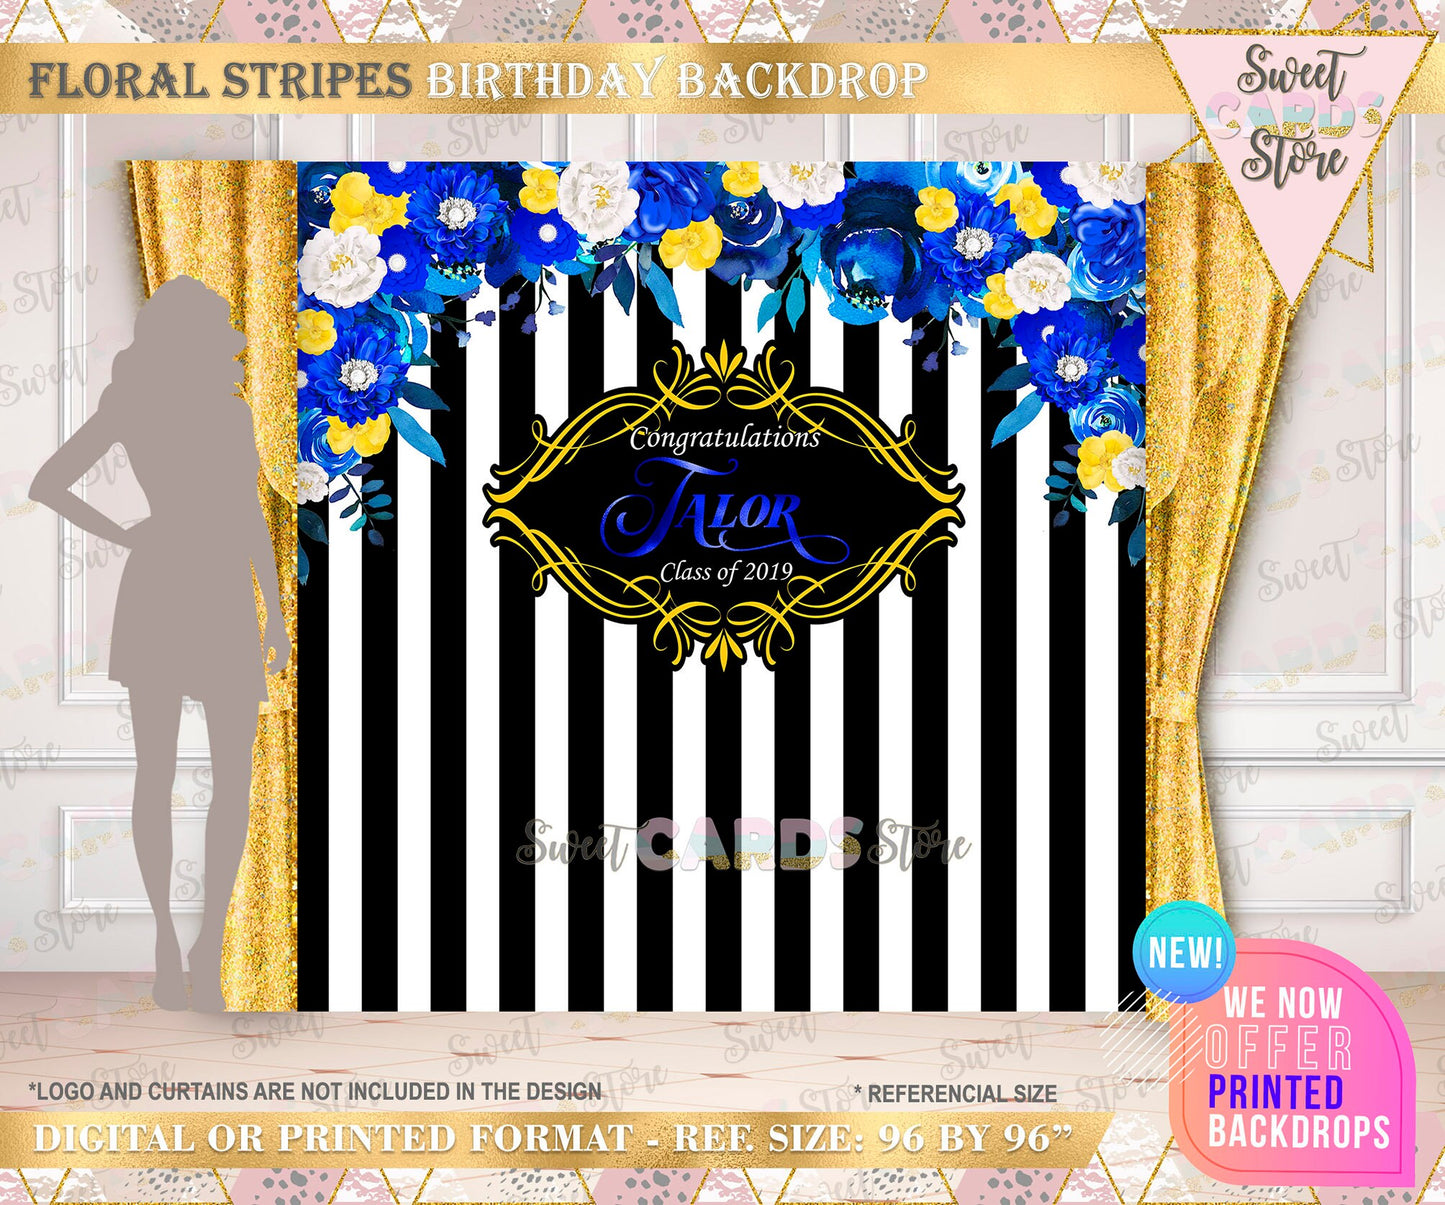 Stripes and floral backdrop, floral backdrop, stripes floral birthday backdrop, royal blue silver floral stripes birthday backdrop